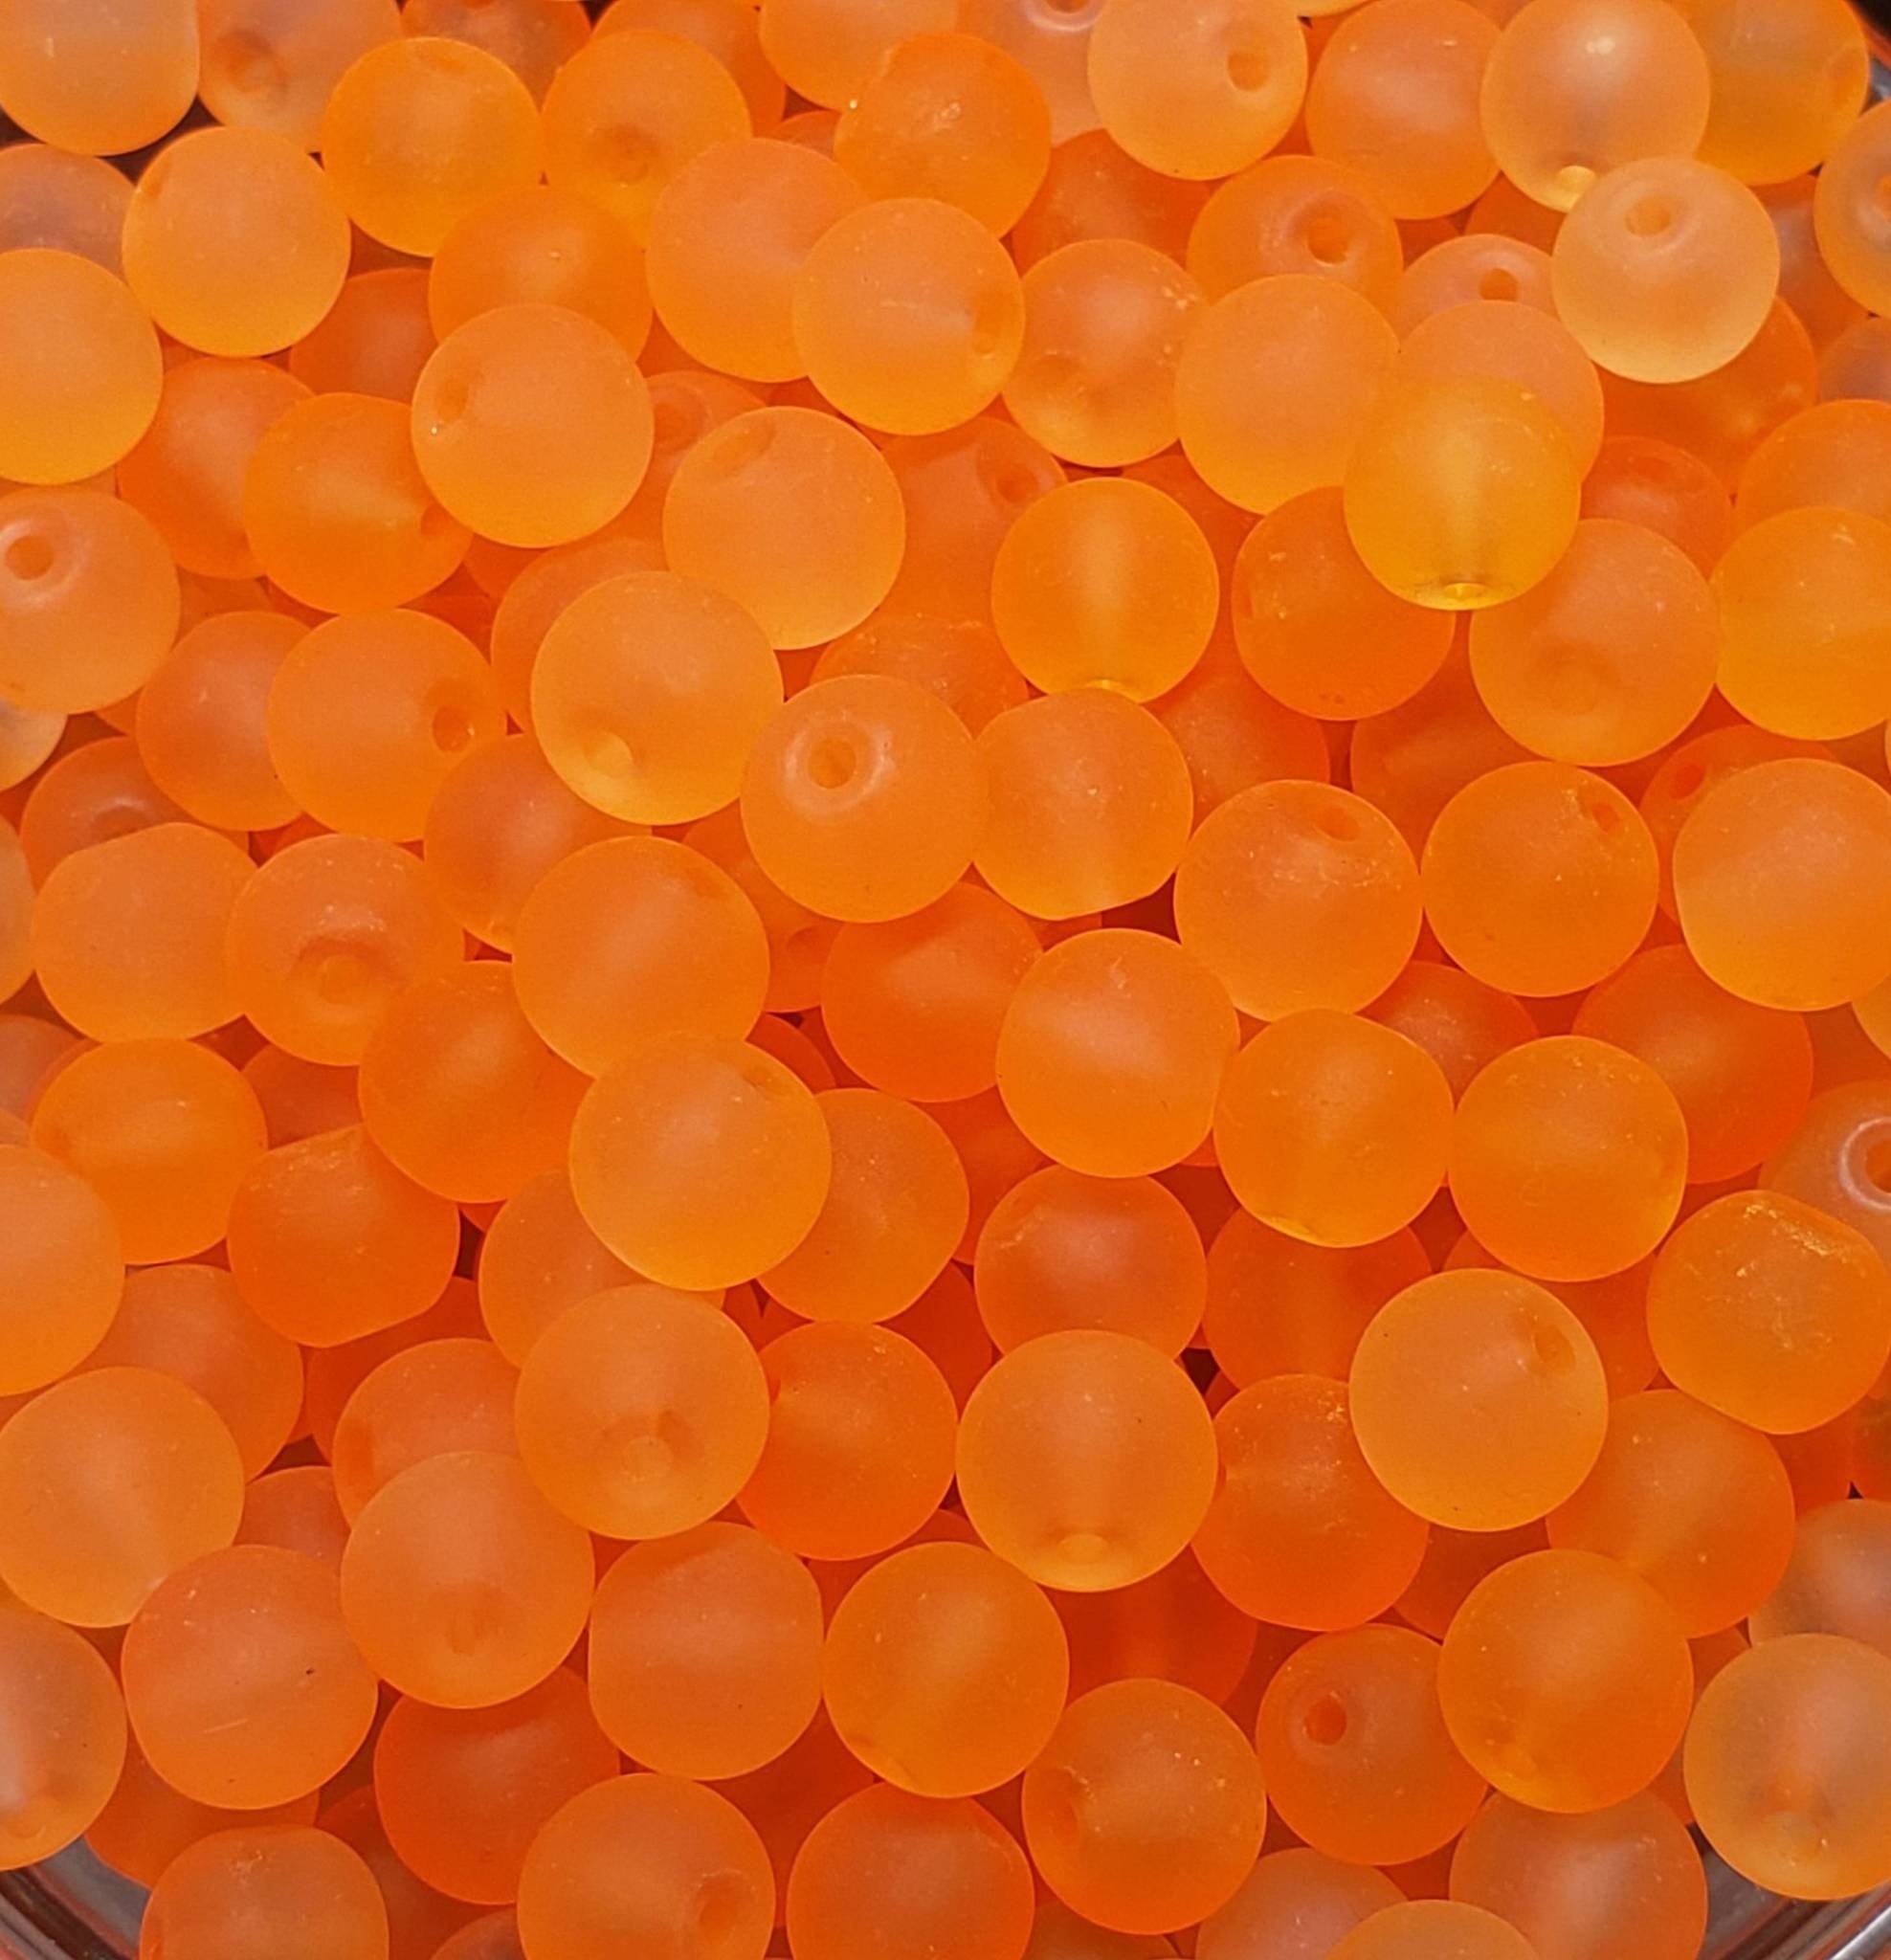 creek candy beads